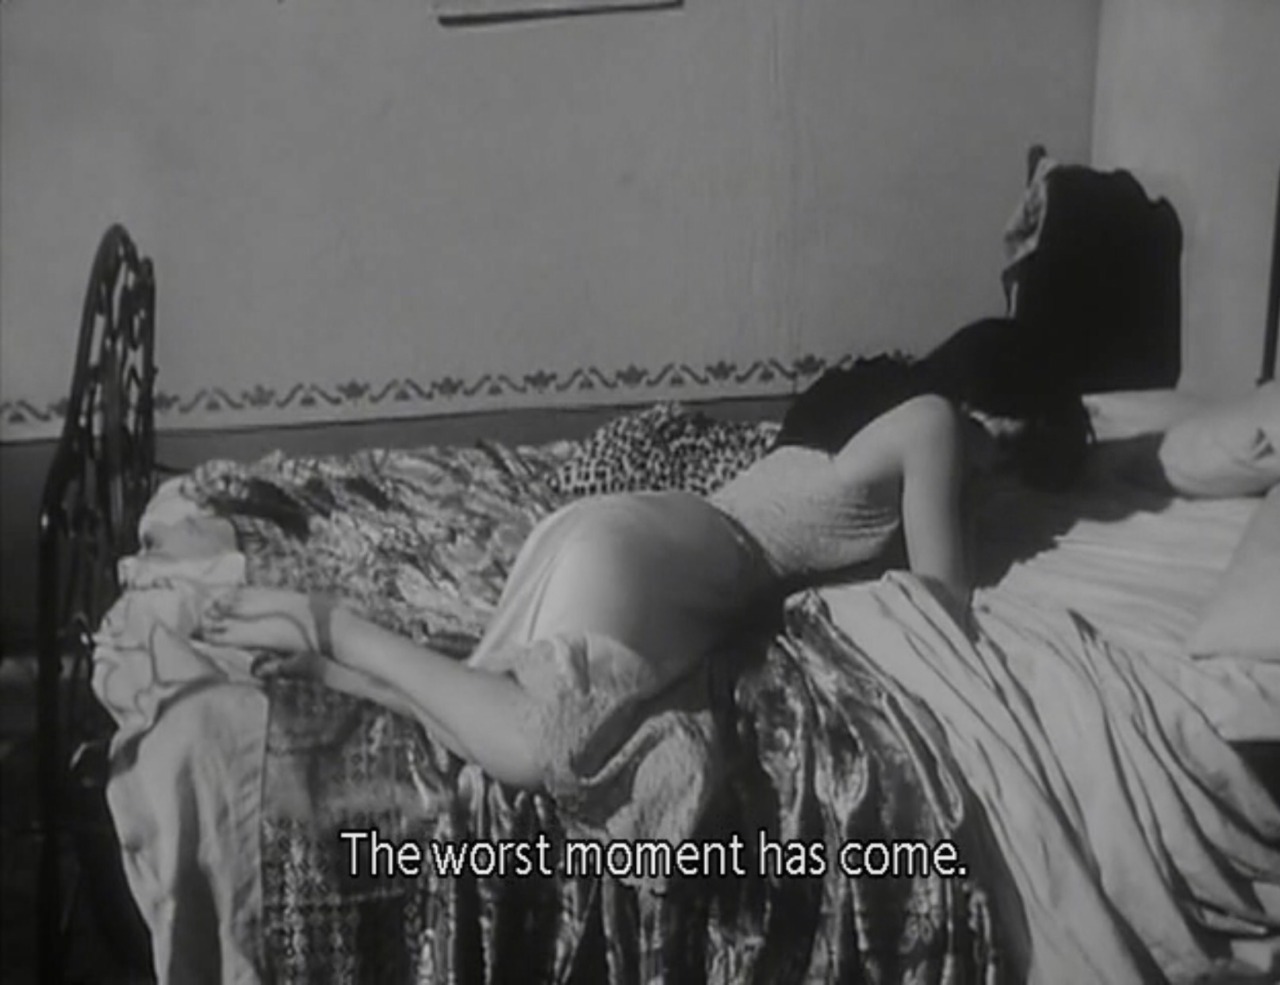 garbonzos:Cronaca di un Amore/ Story of a Love Affair, Michelangelo Antonioni, 1950